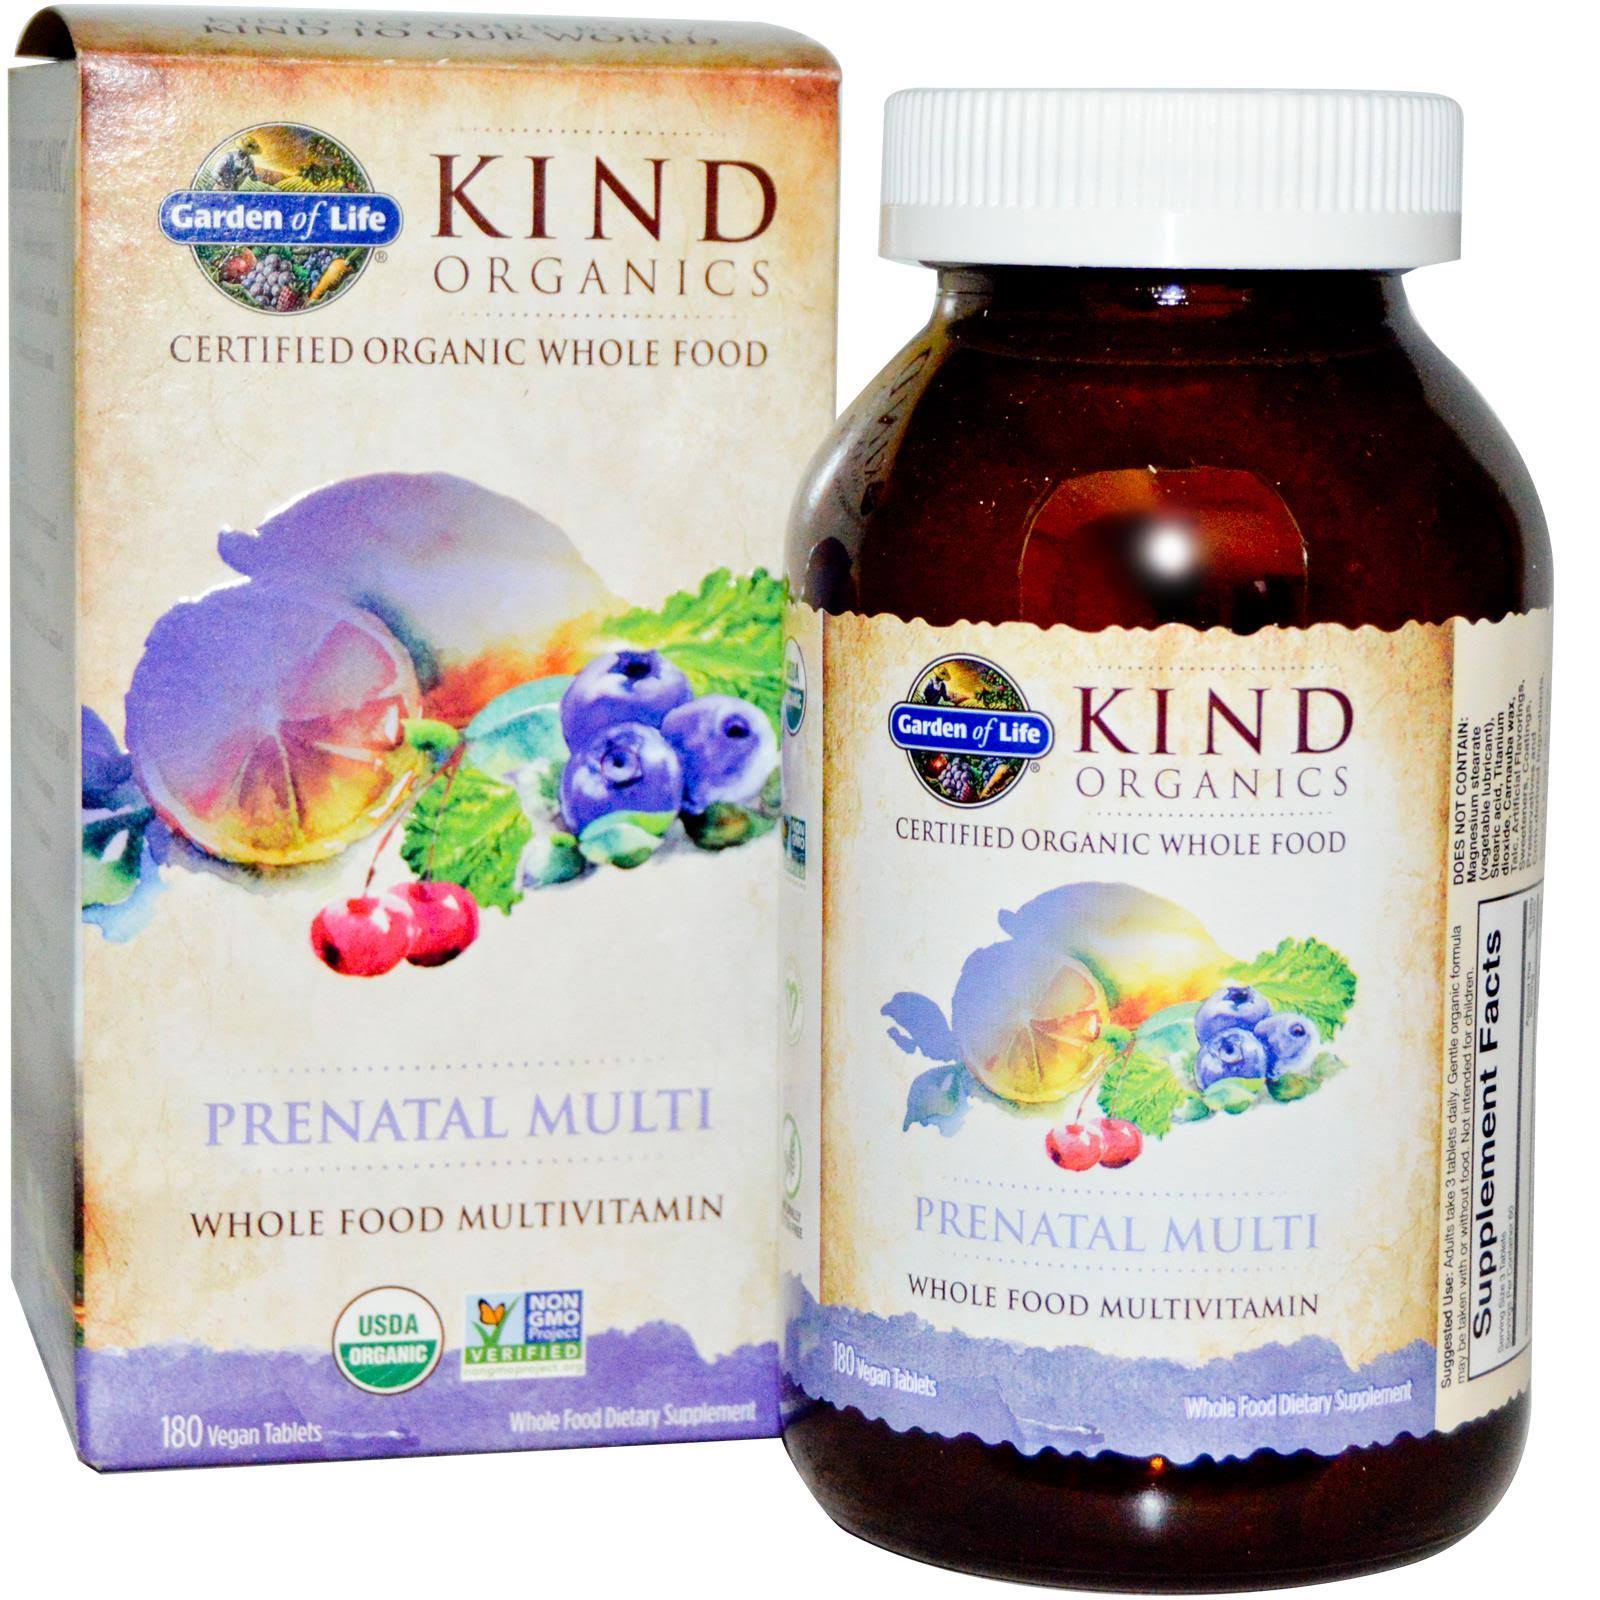 Garden Of Life Mykind Organics Prenatal Multi Whole Food Multivitamin - 90 Tablets